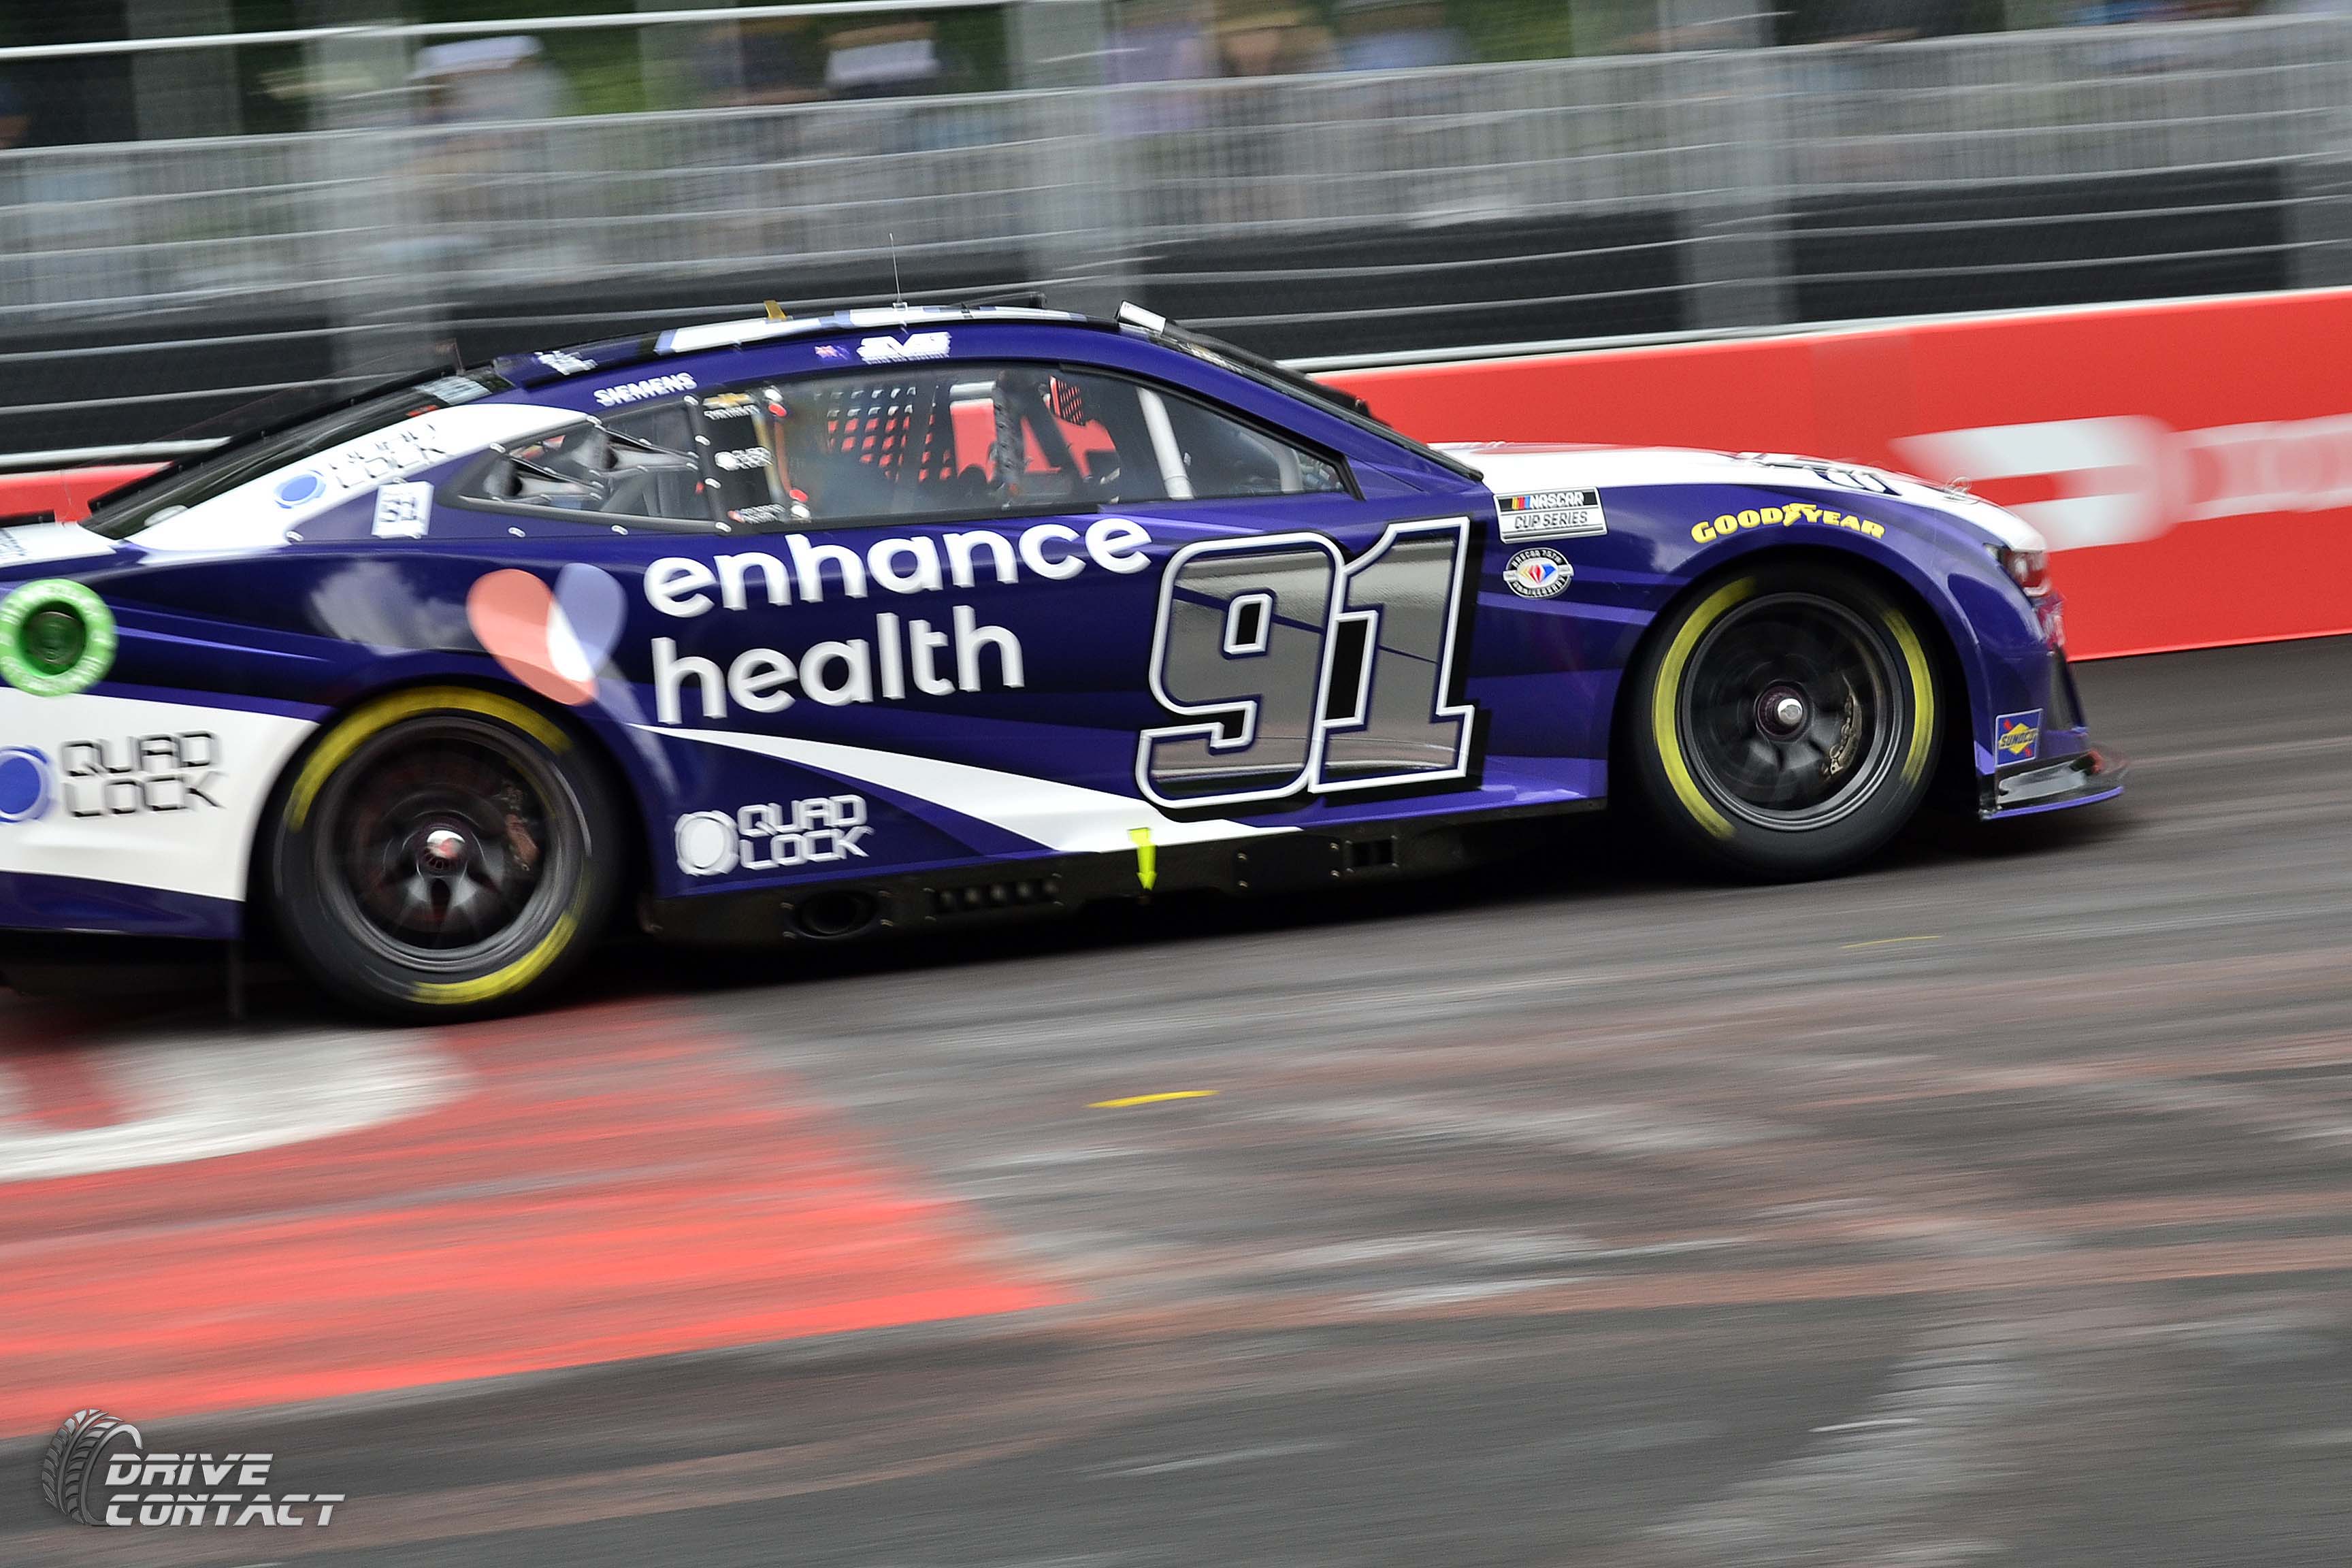 Shane Van Gisbergen will drive the No. 91 Enhance Health Chevrolet